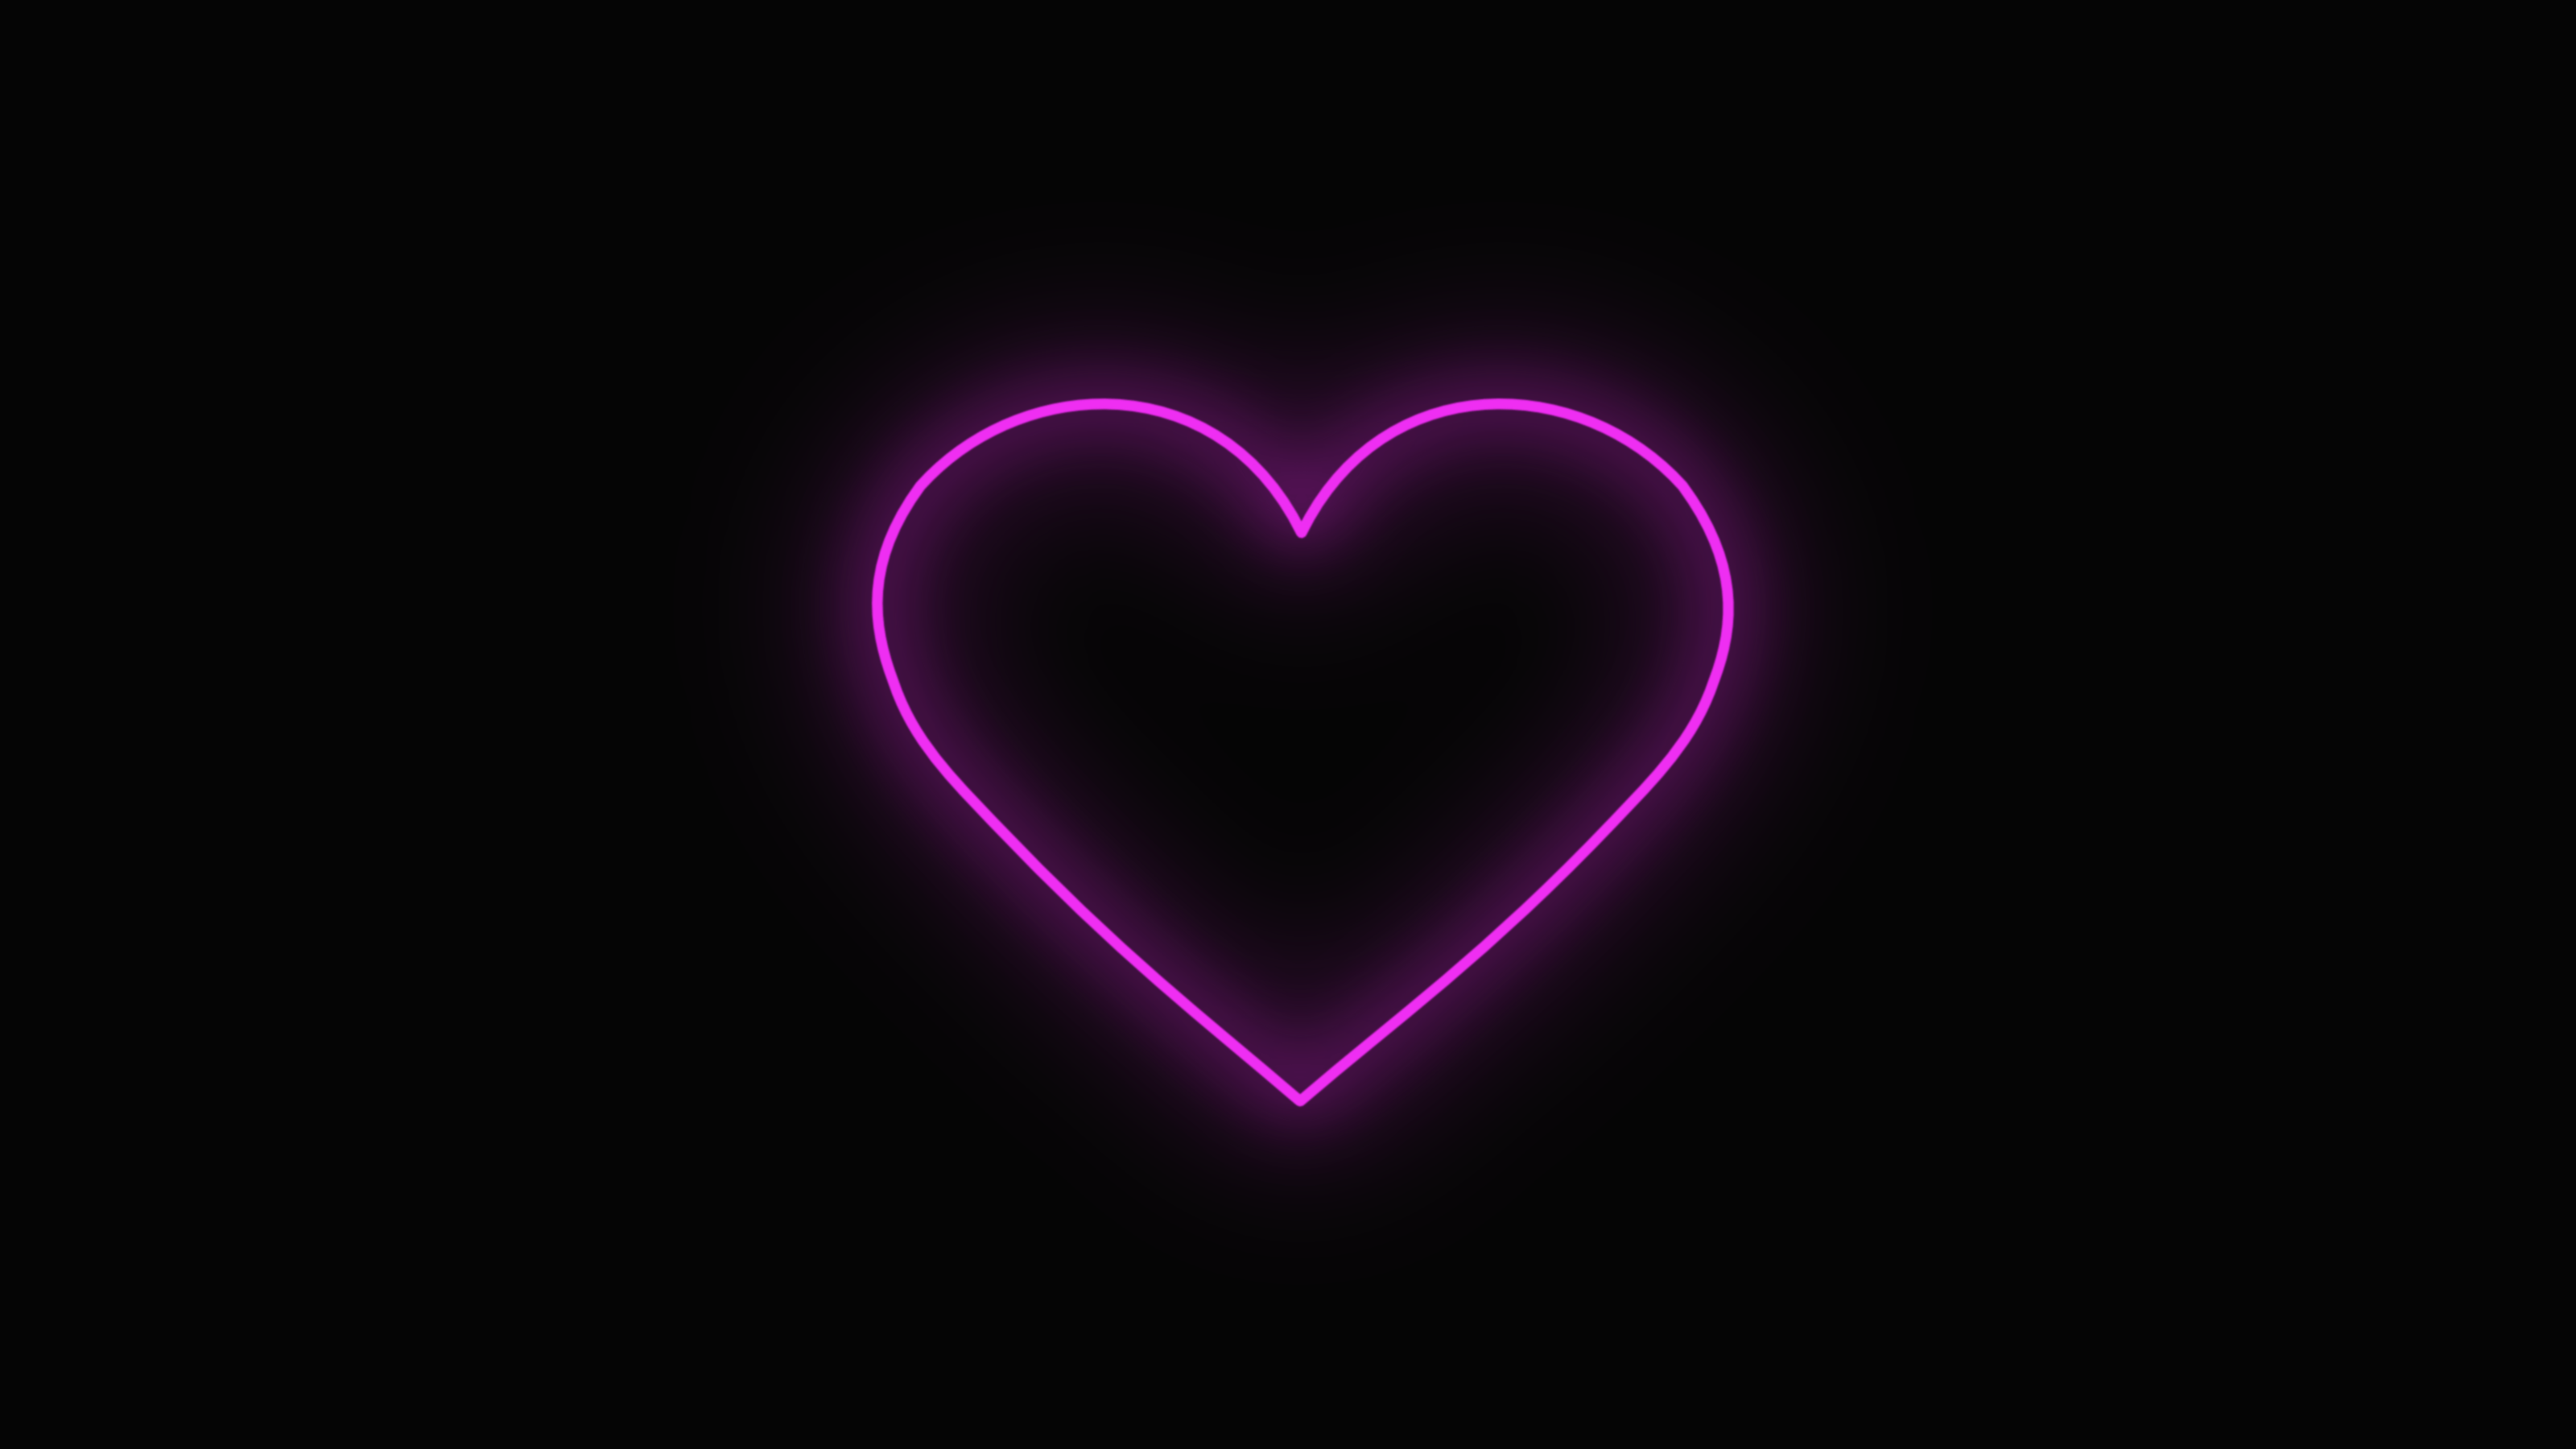 Neon Heart wallpaper by Mambetkadyrov  Download on ZEDGE  92ca